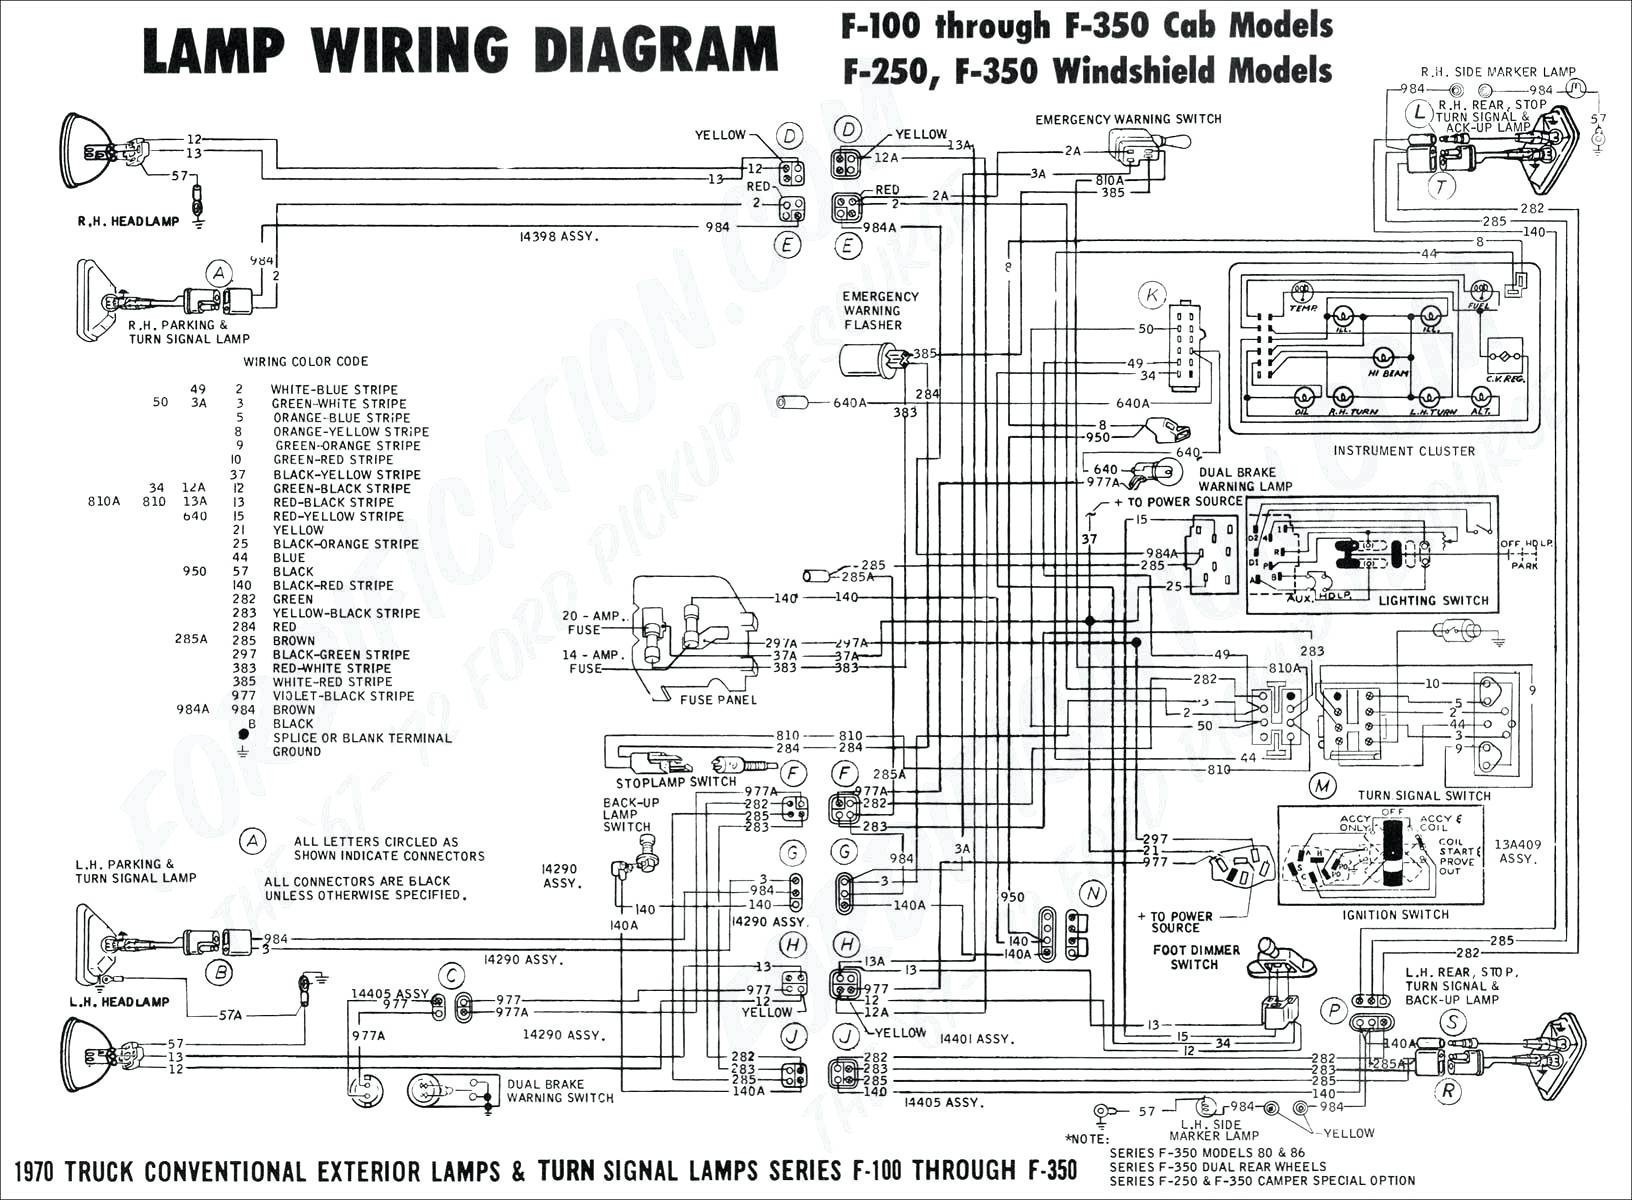 Briggs and Stratton Engine Diagram Free Briggs Magneto Wiring Diagram Wiring Diagram New Of Briggs and Stratton Engine Diagram Free